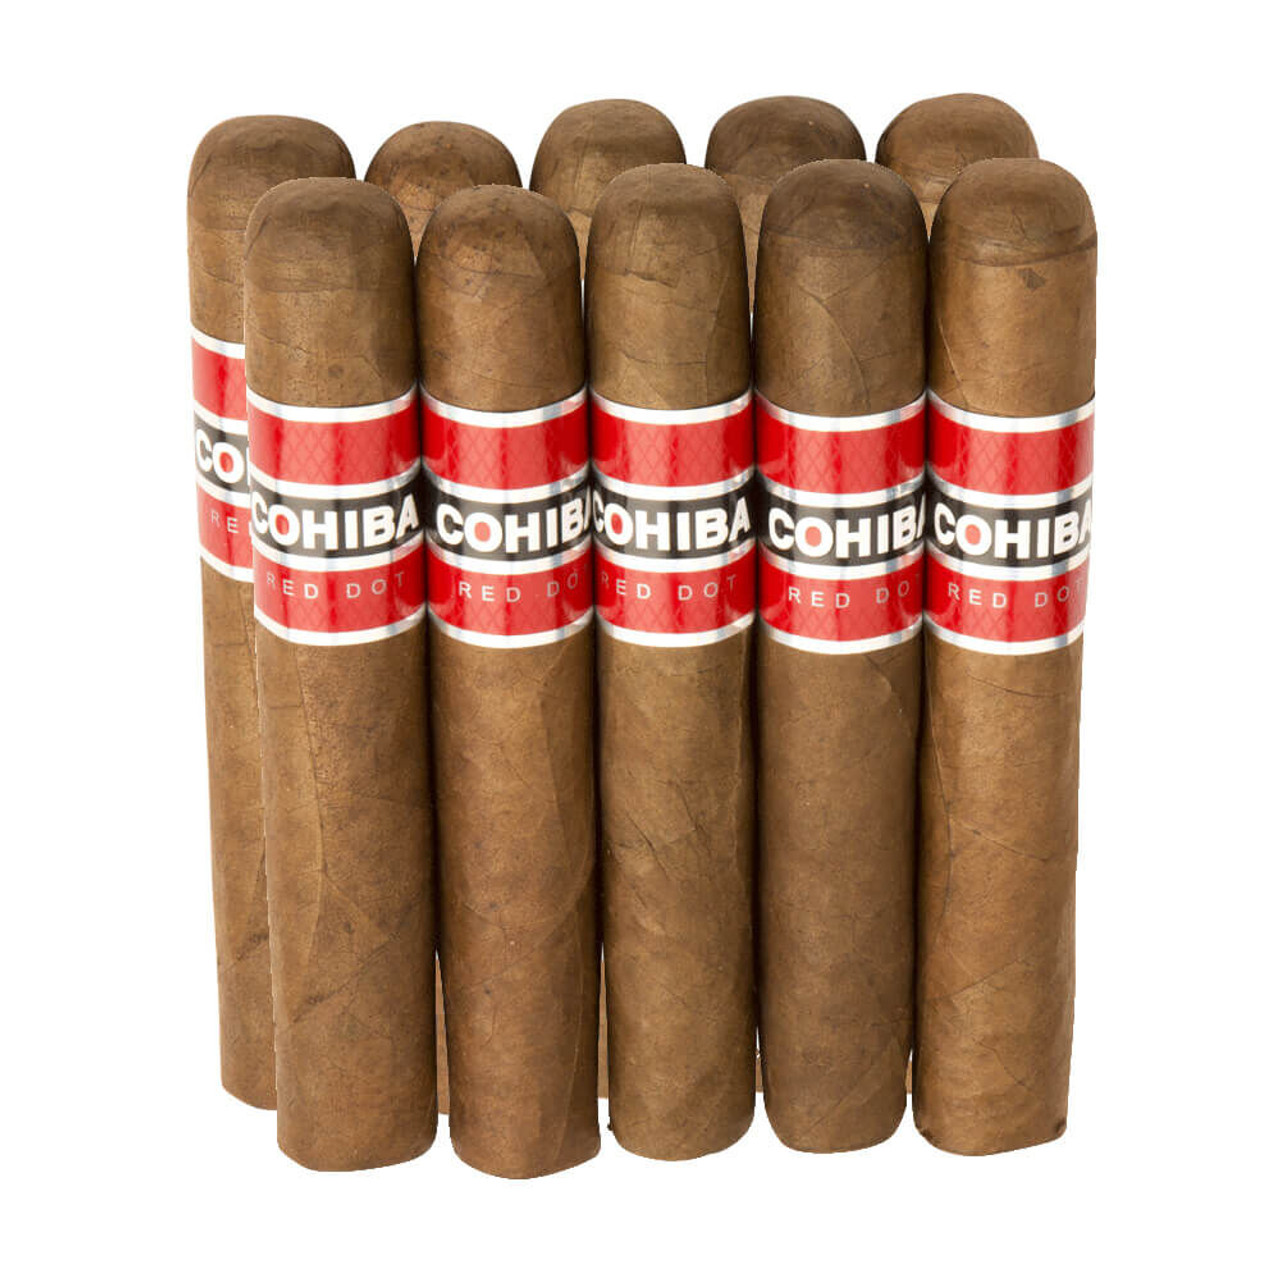 Cohiba Red Dot Robusto Cigars - 5 x 49 (Pack of 10) *Box